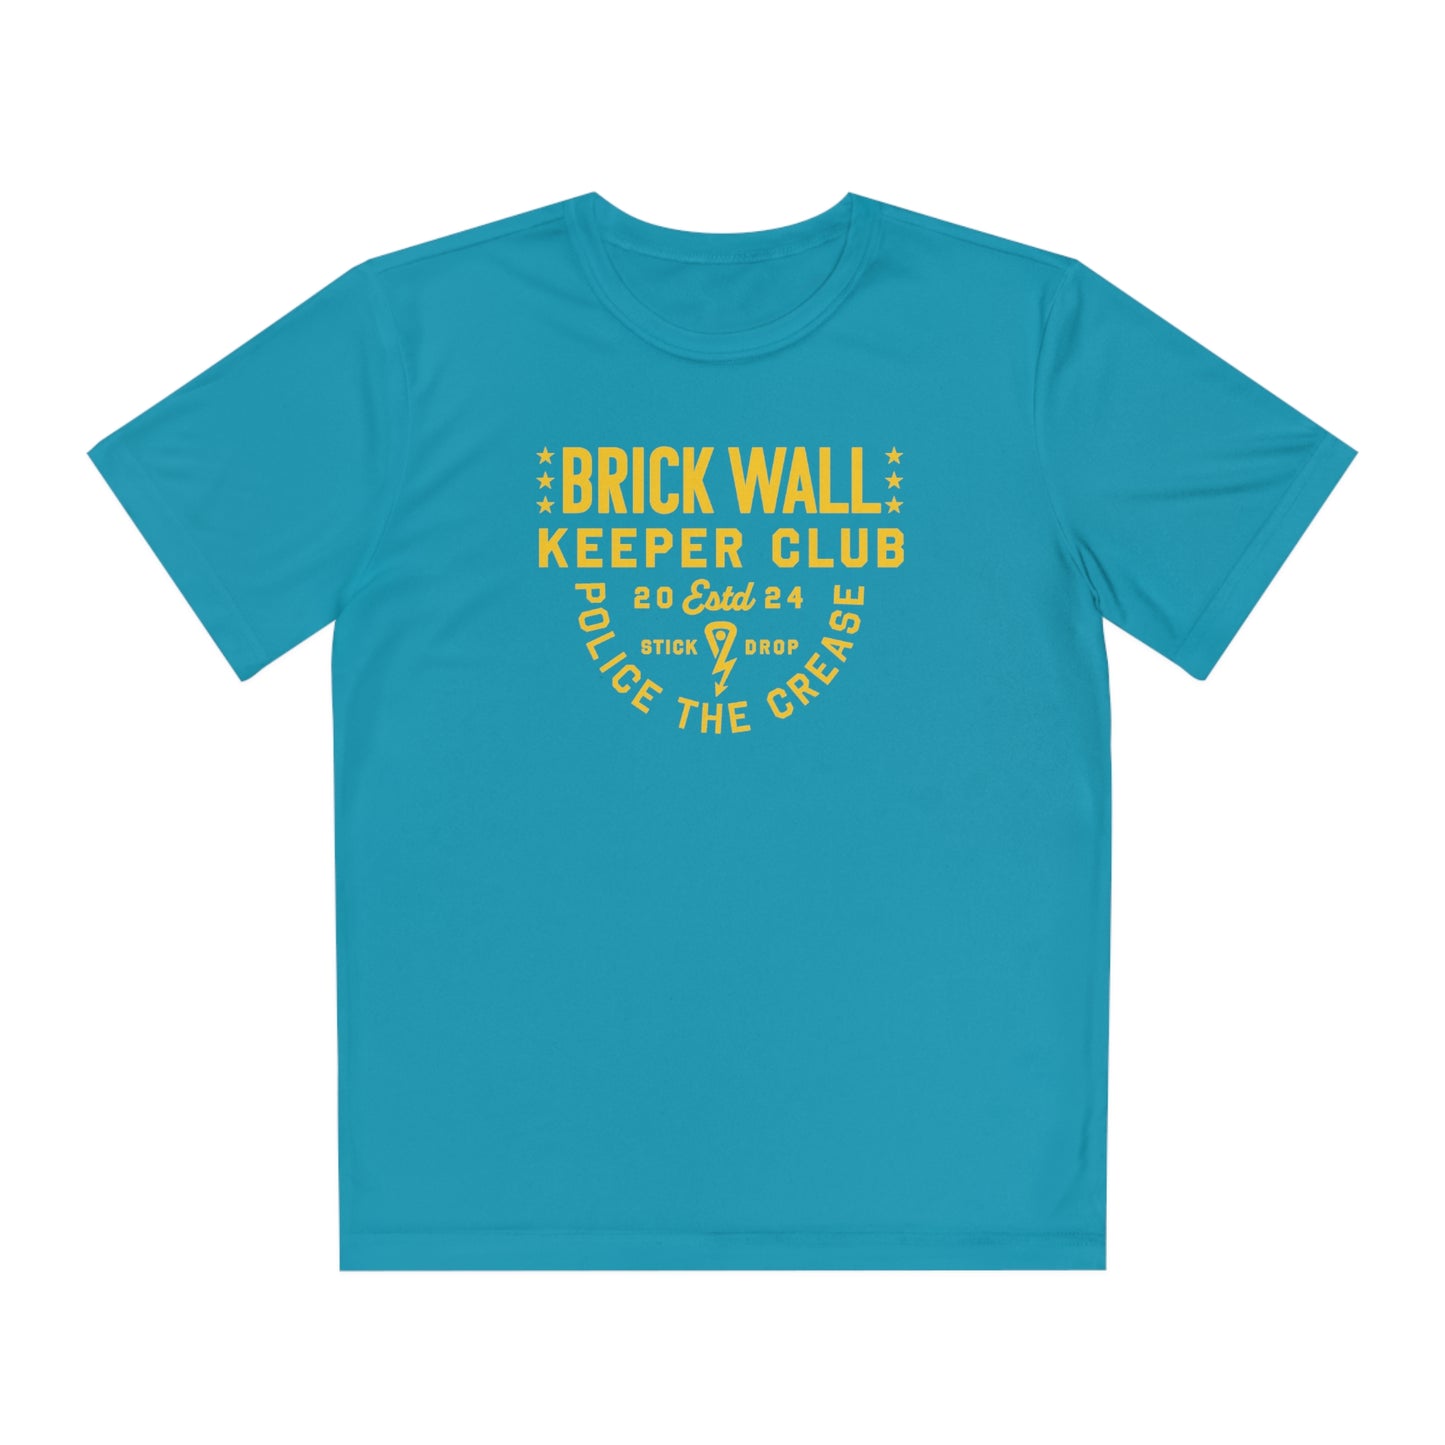 Youth Sport-Tek Brick Wall Keeper Club Tropic Blue Tee